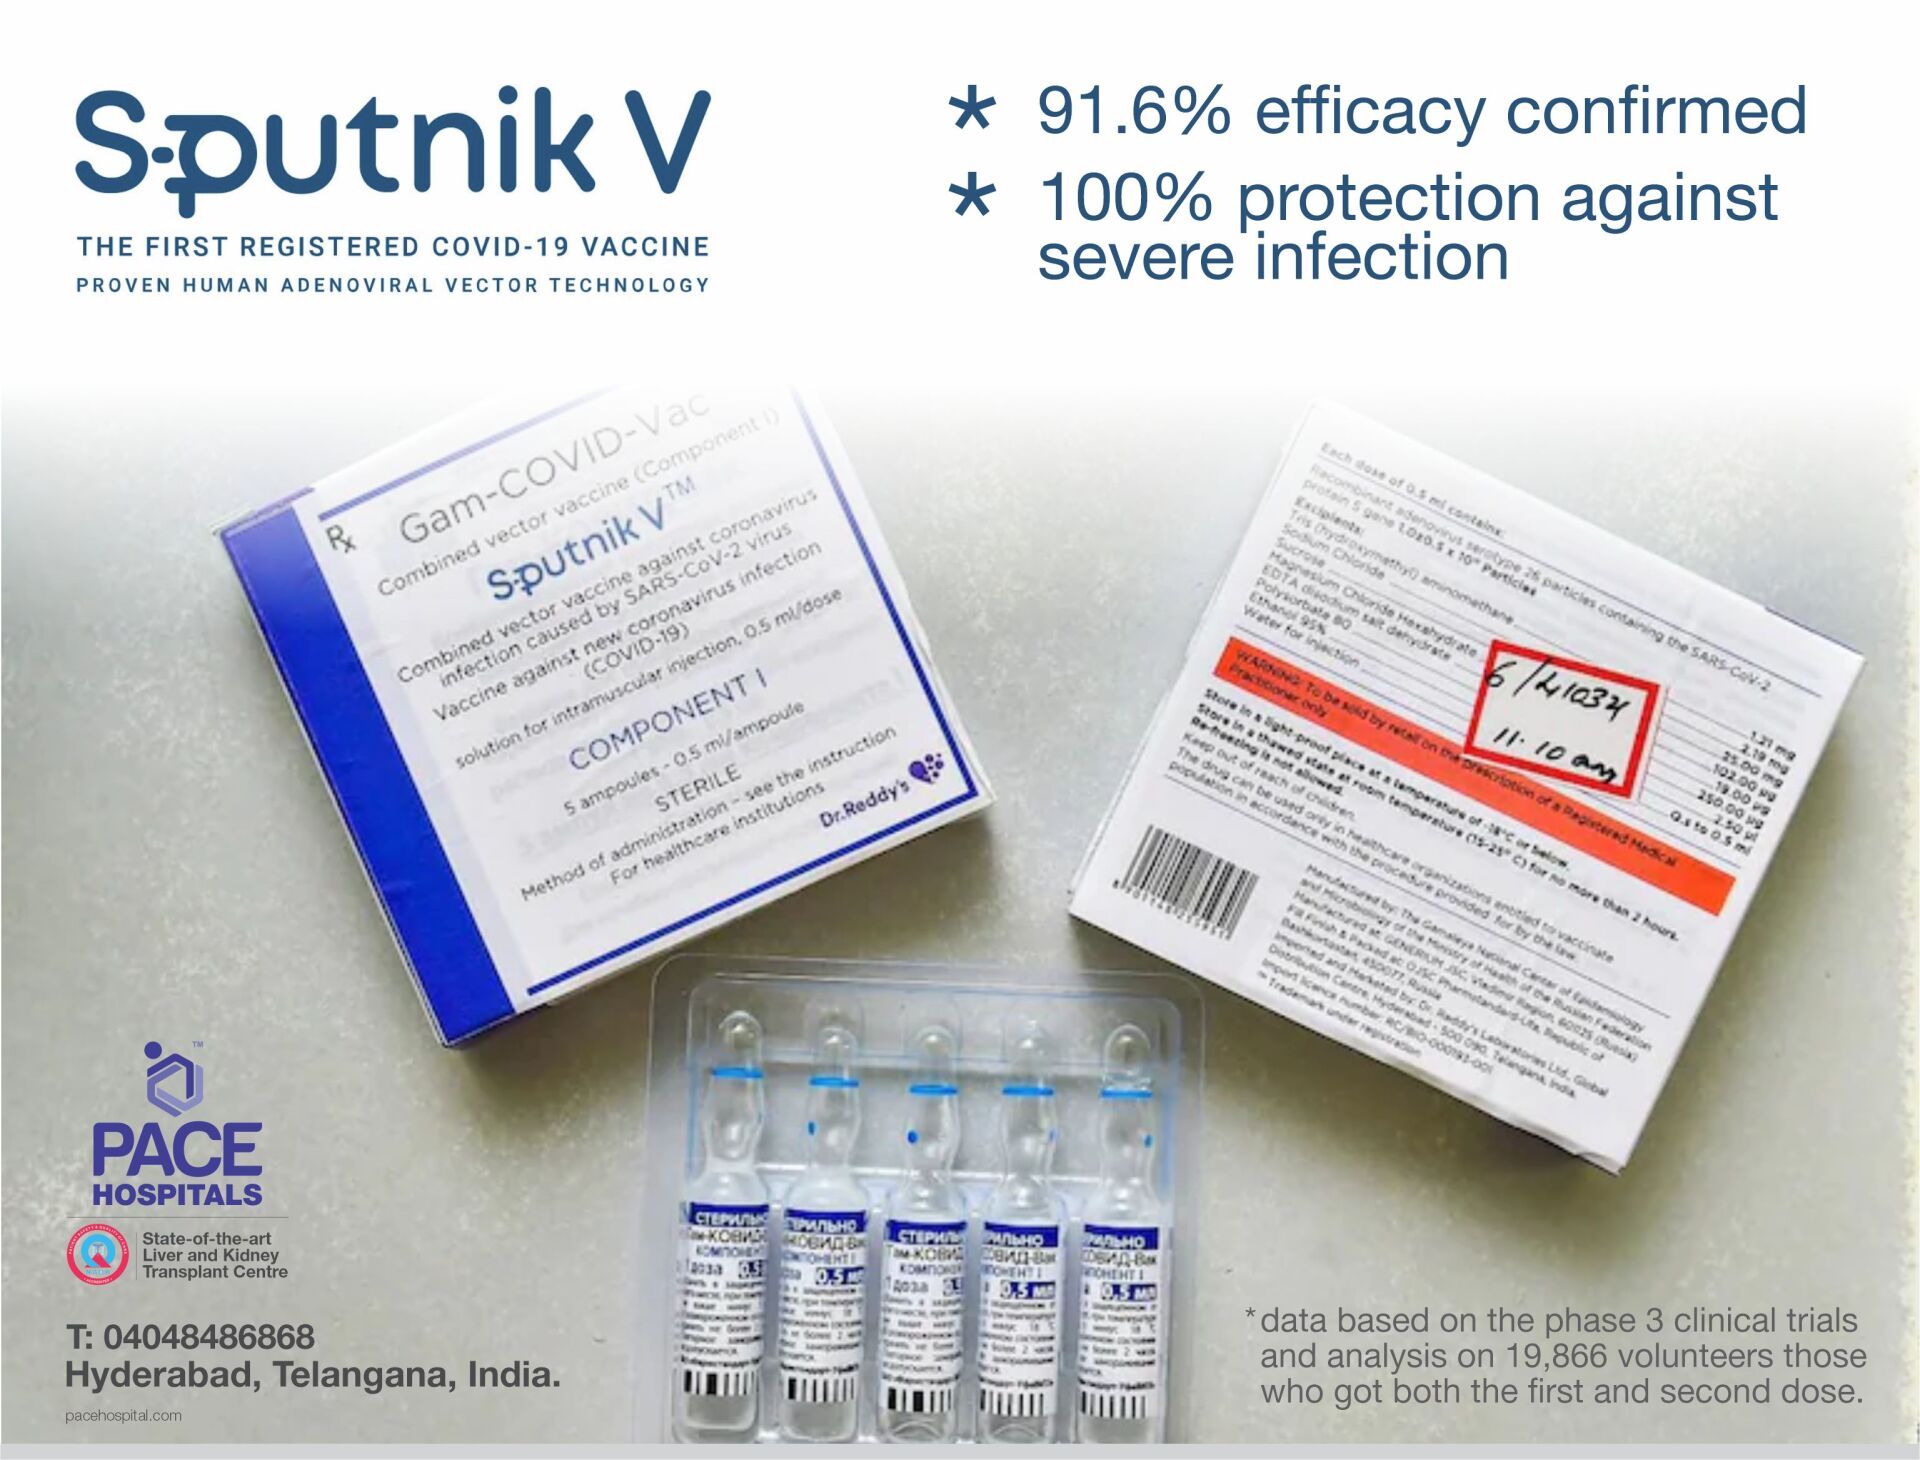 Sputnik V Vaccine efficacy - demonstrates 91.6% efficacy and 91.8% efficacy in elderly people | Gam-COVID-Vac